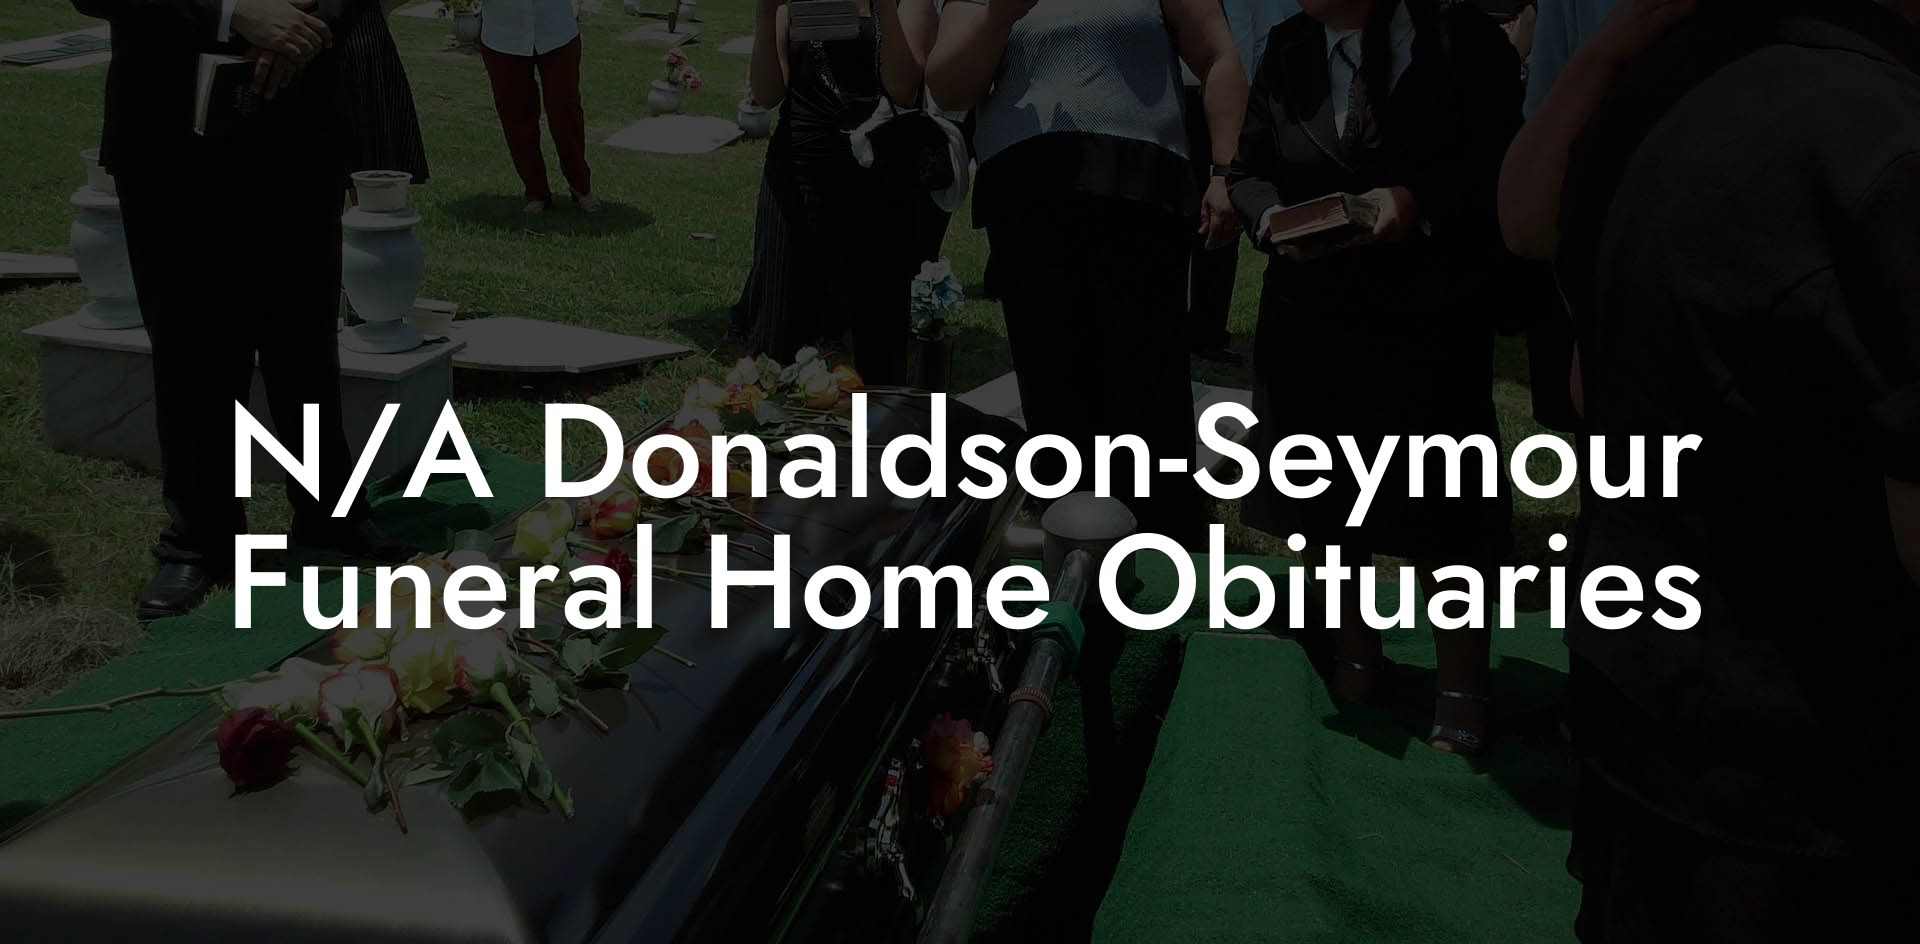 N/A Donaldson-Seymour Funeral Home Obituaries